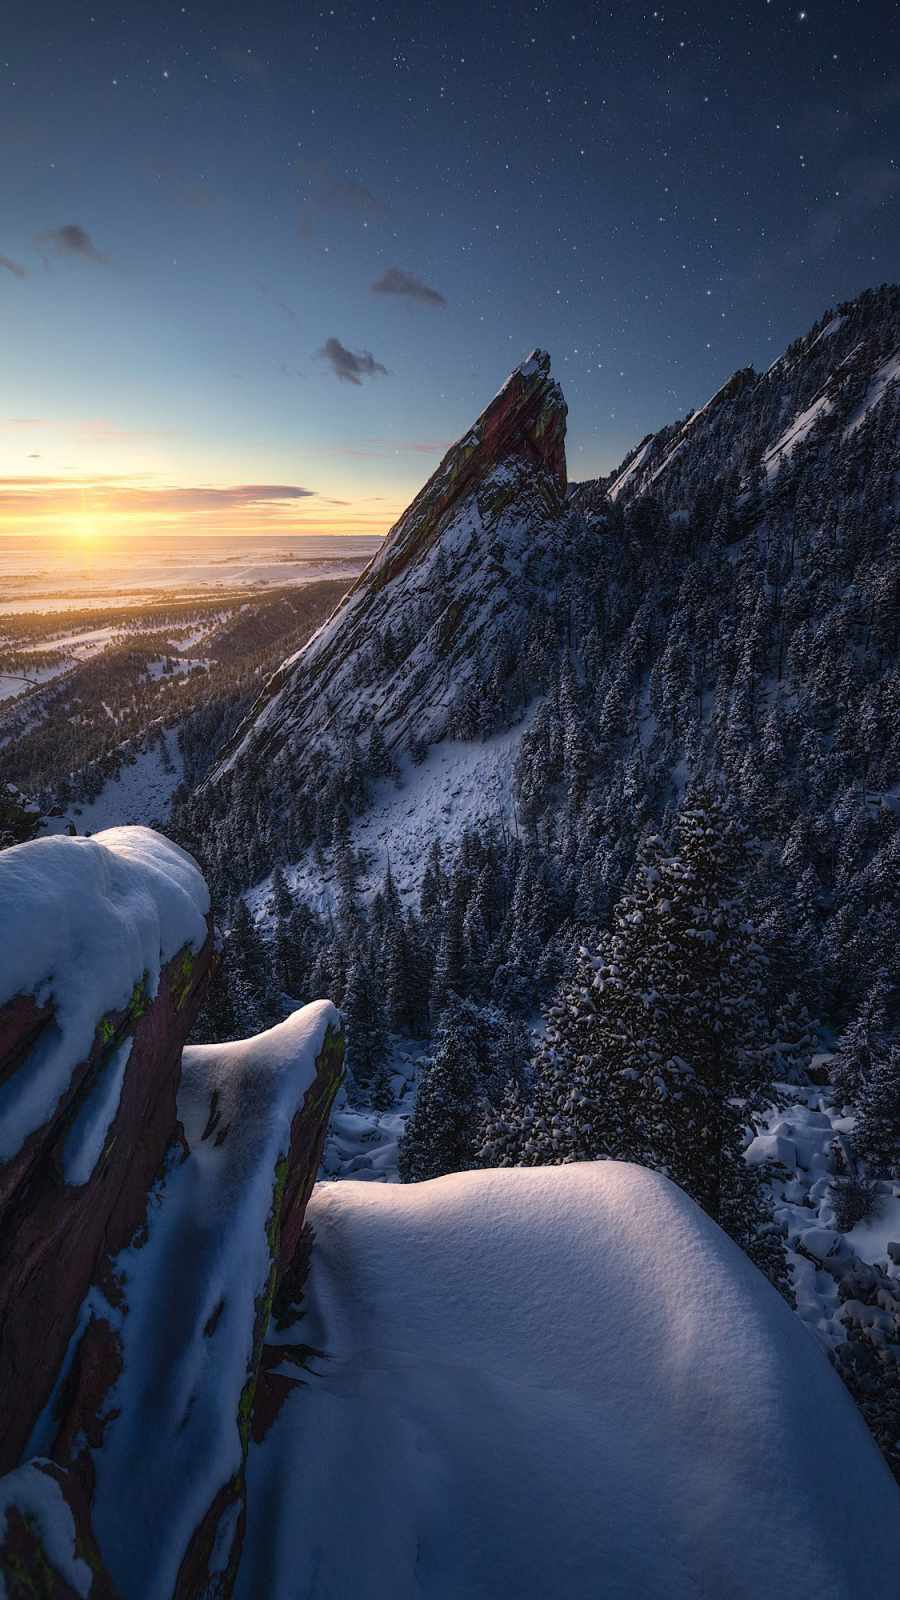 Snow Mountain Peaks IPhone Wallpaper - IPhone Wallpapers : iPhone Wallpapers